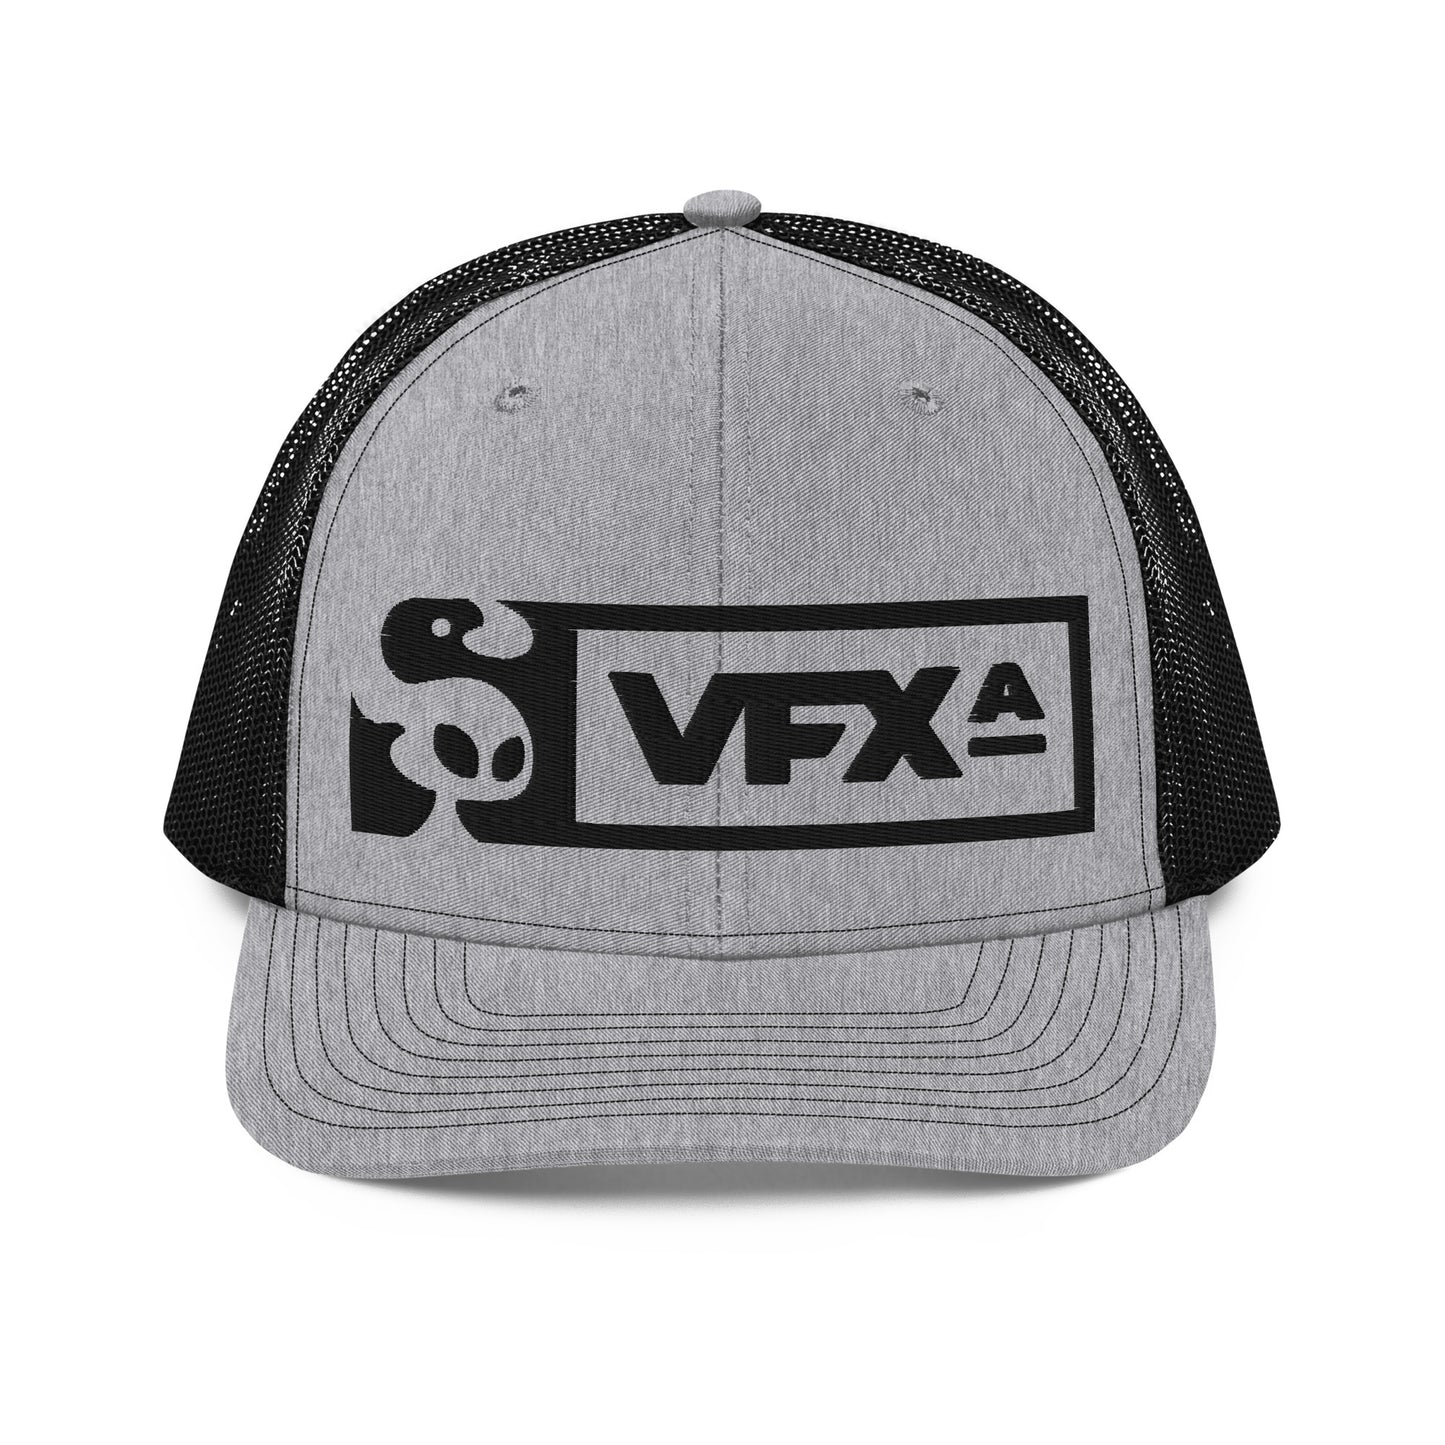 Trucker Cap: Dark VFX-A Logo